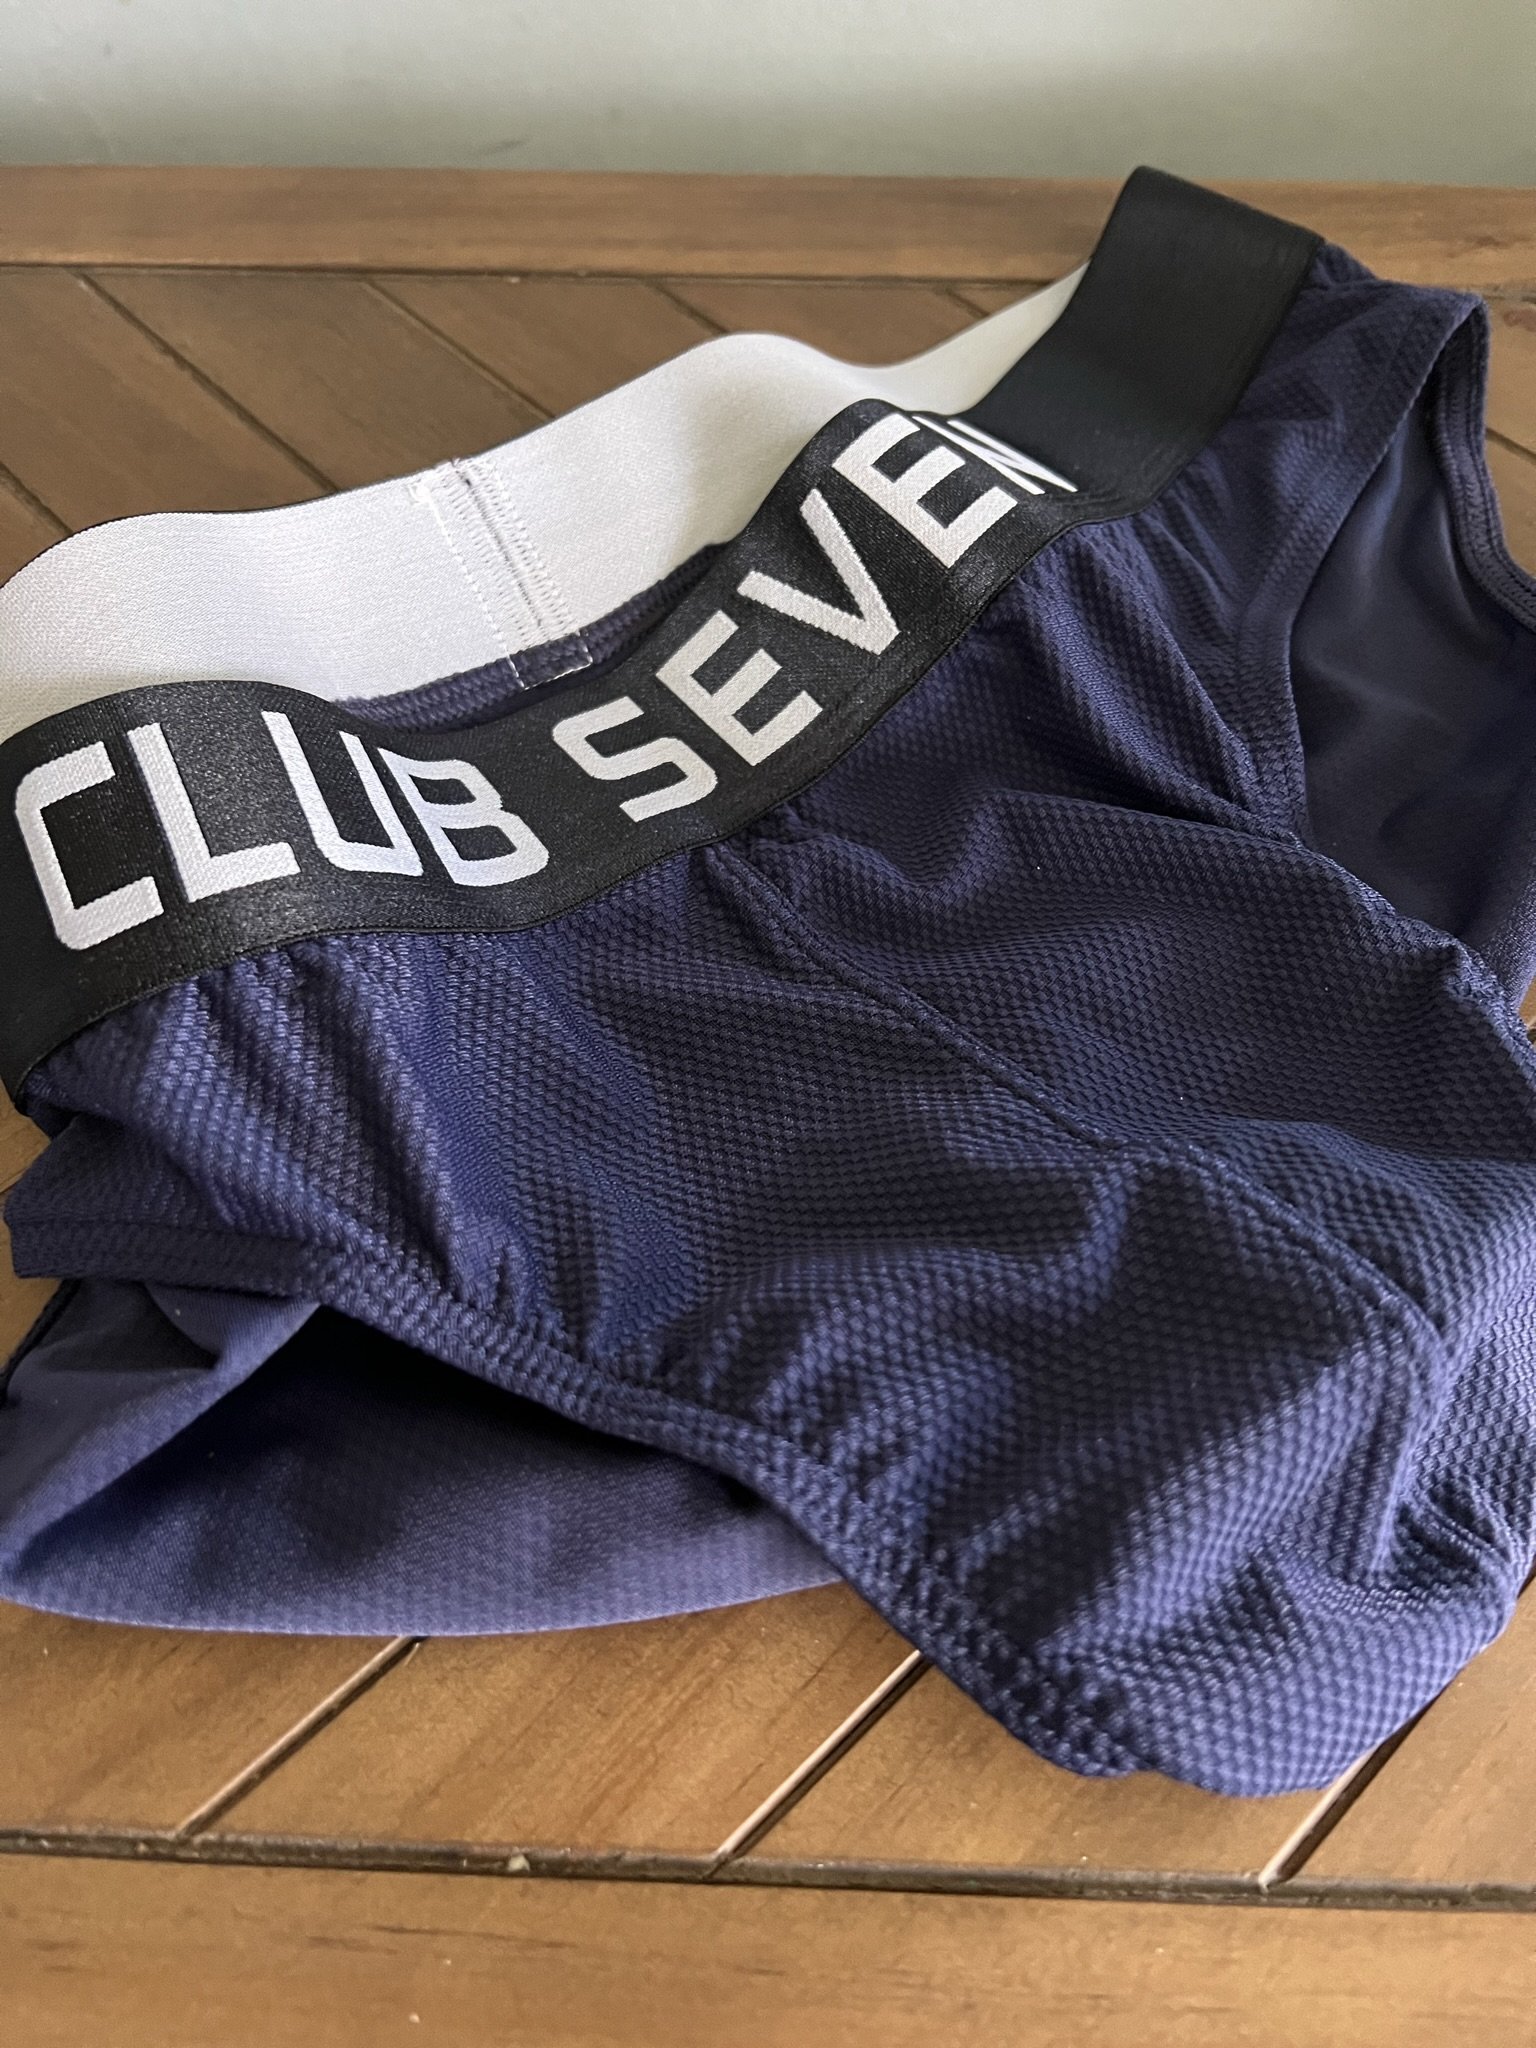 Club Seven Menswear Underwear Review. Should you buy them